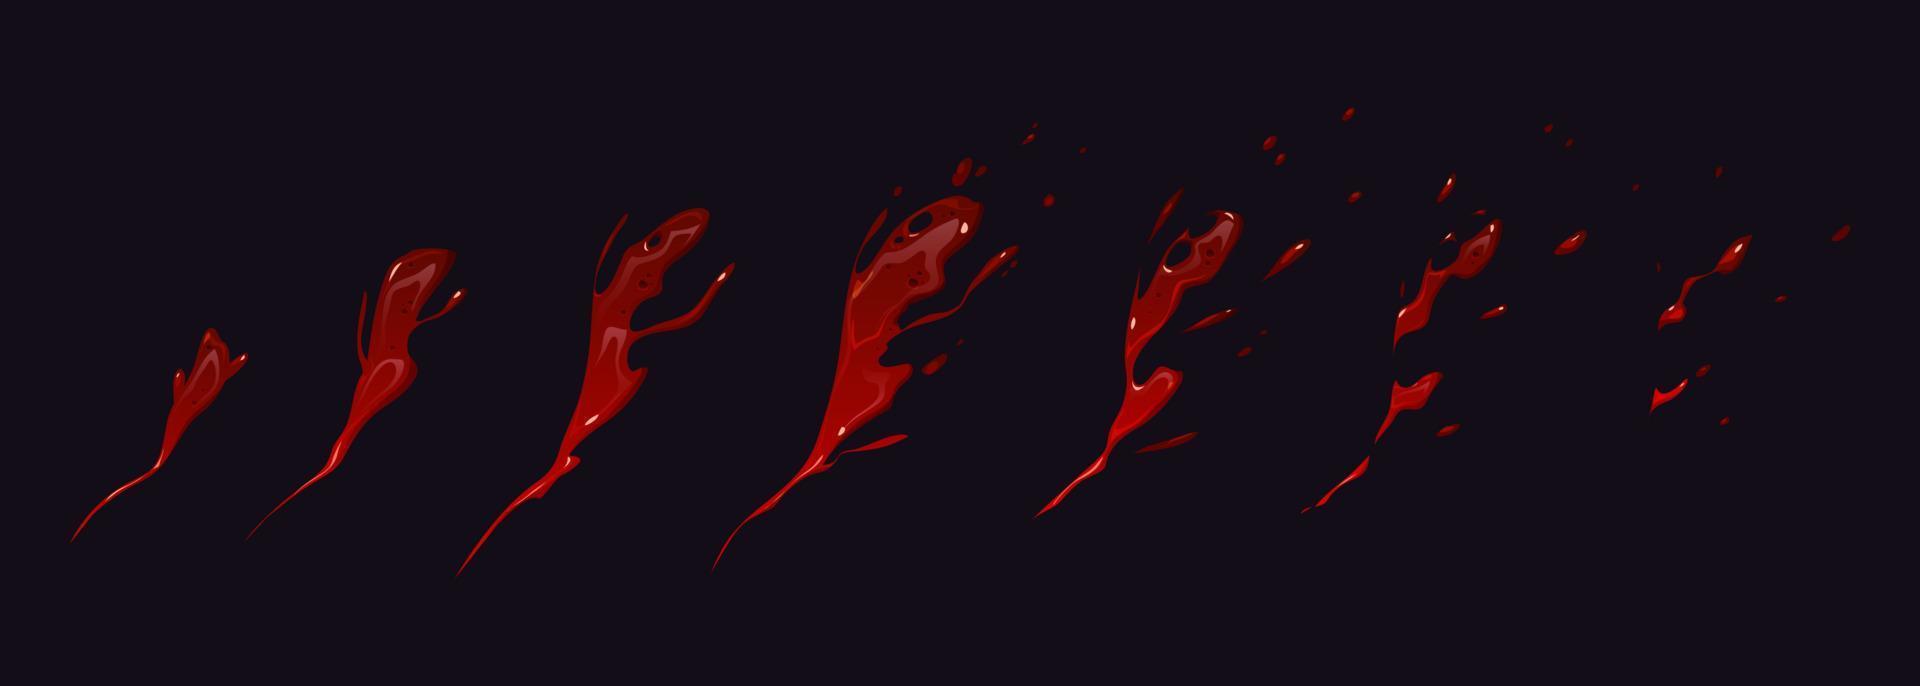 Blood splash animation sprite sheet dynamic motion vector